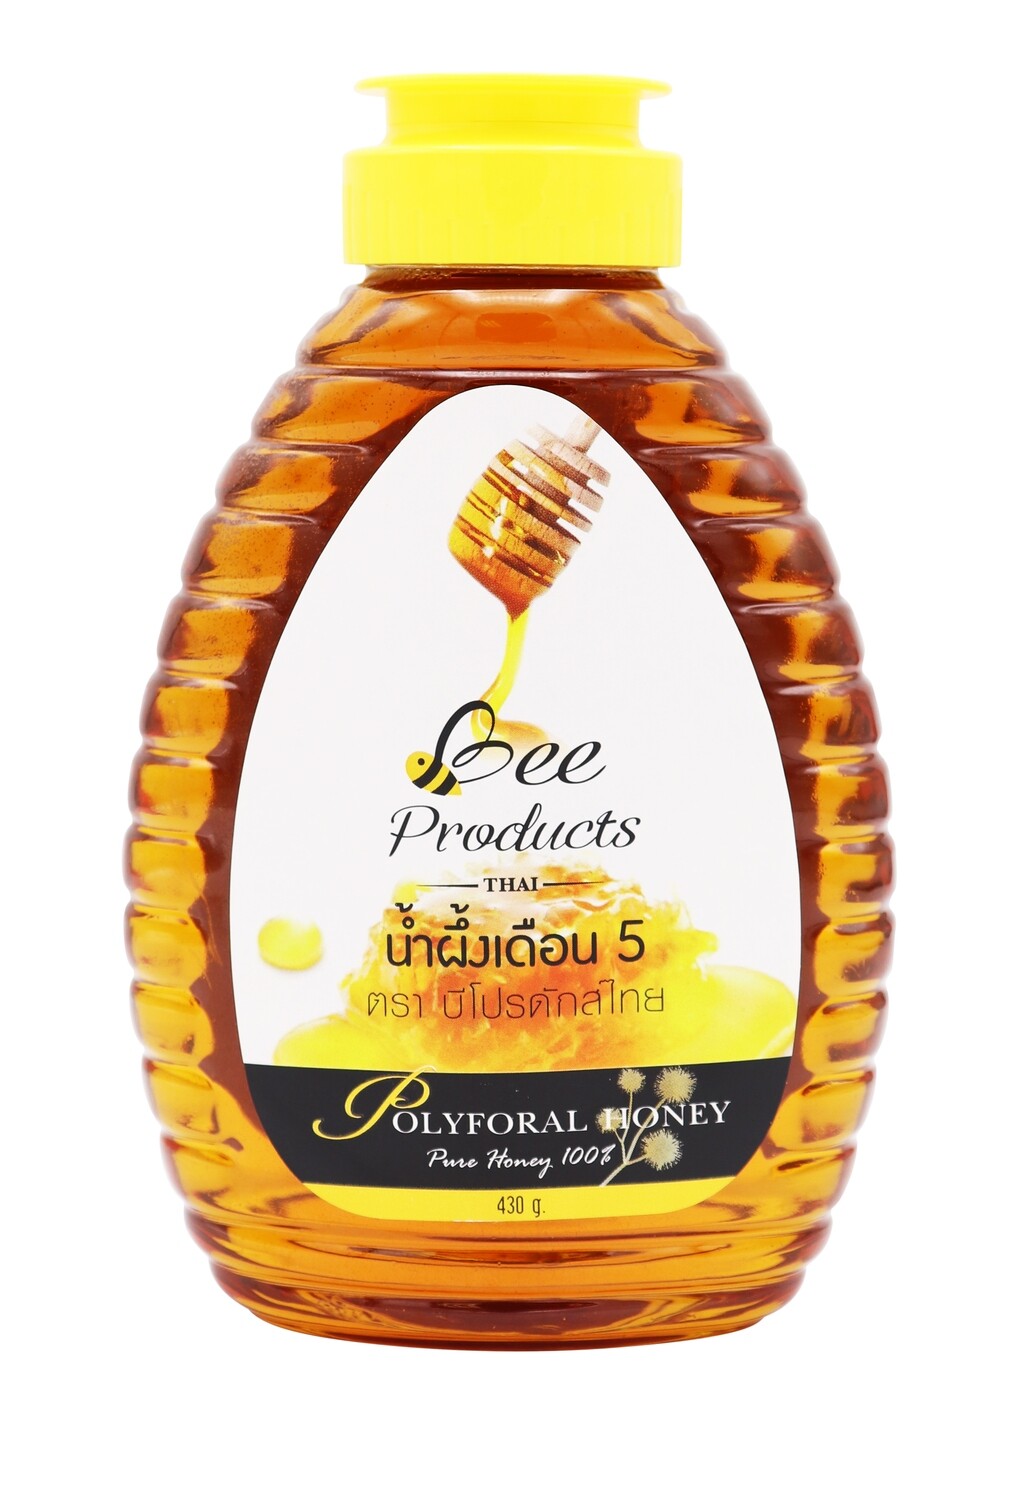 Polyforal Honey